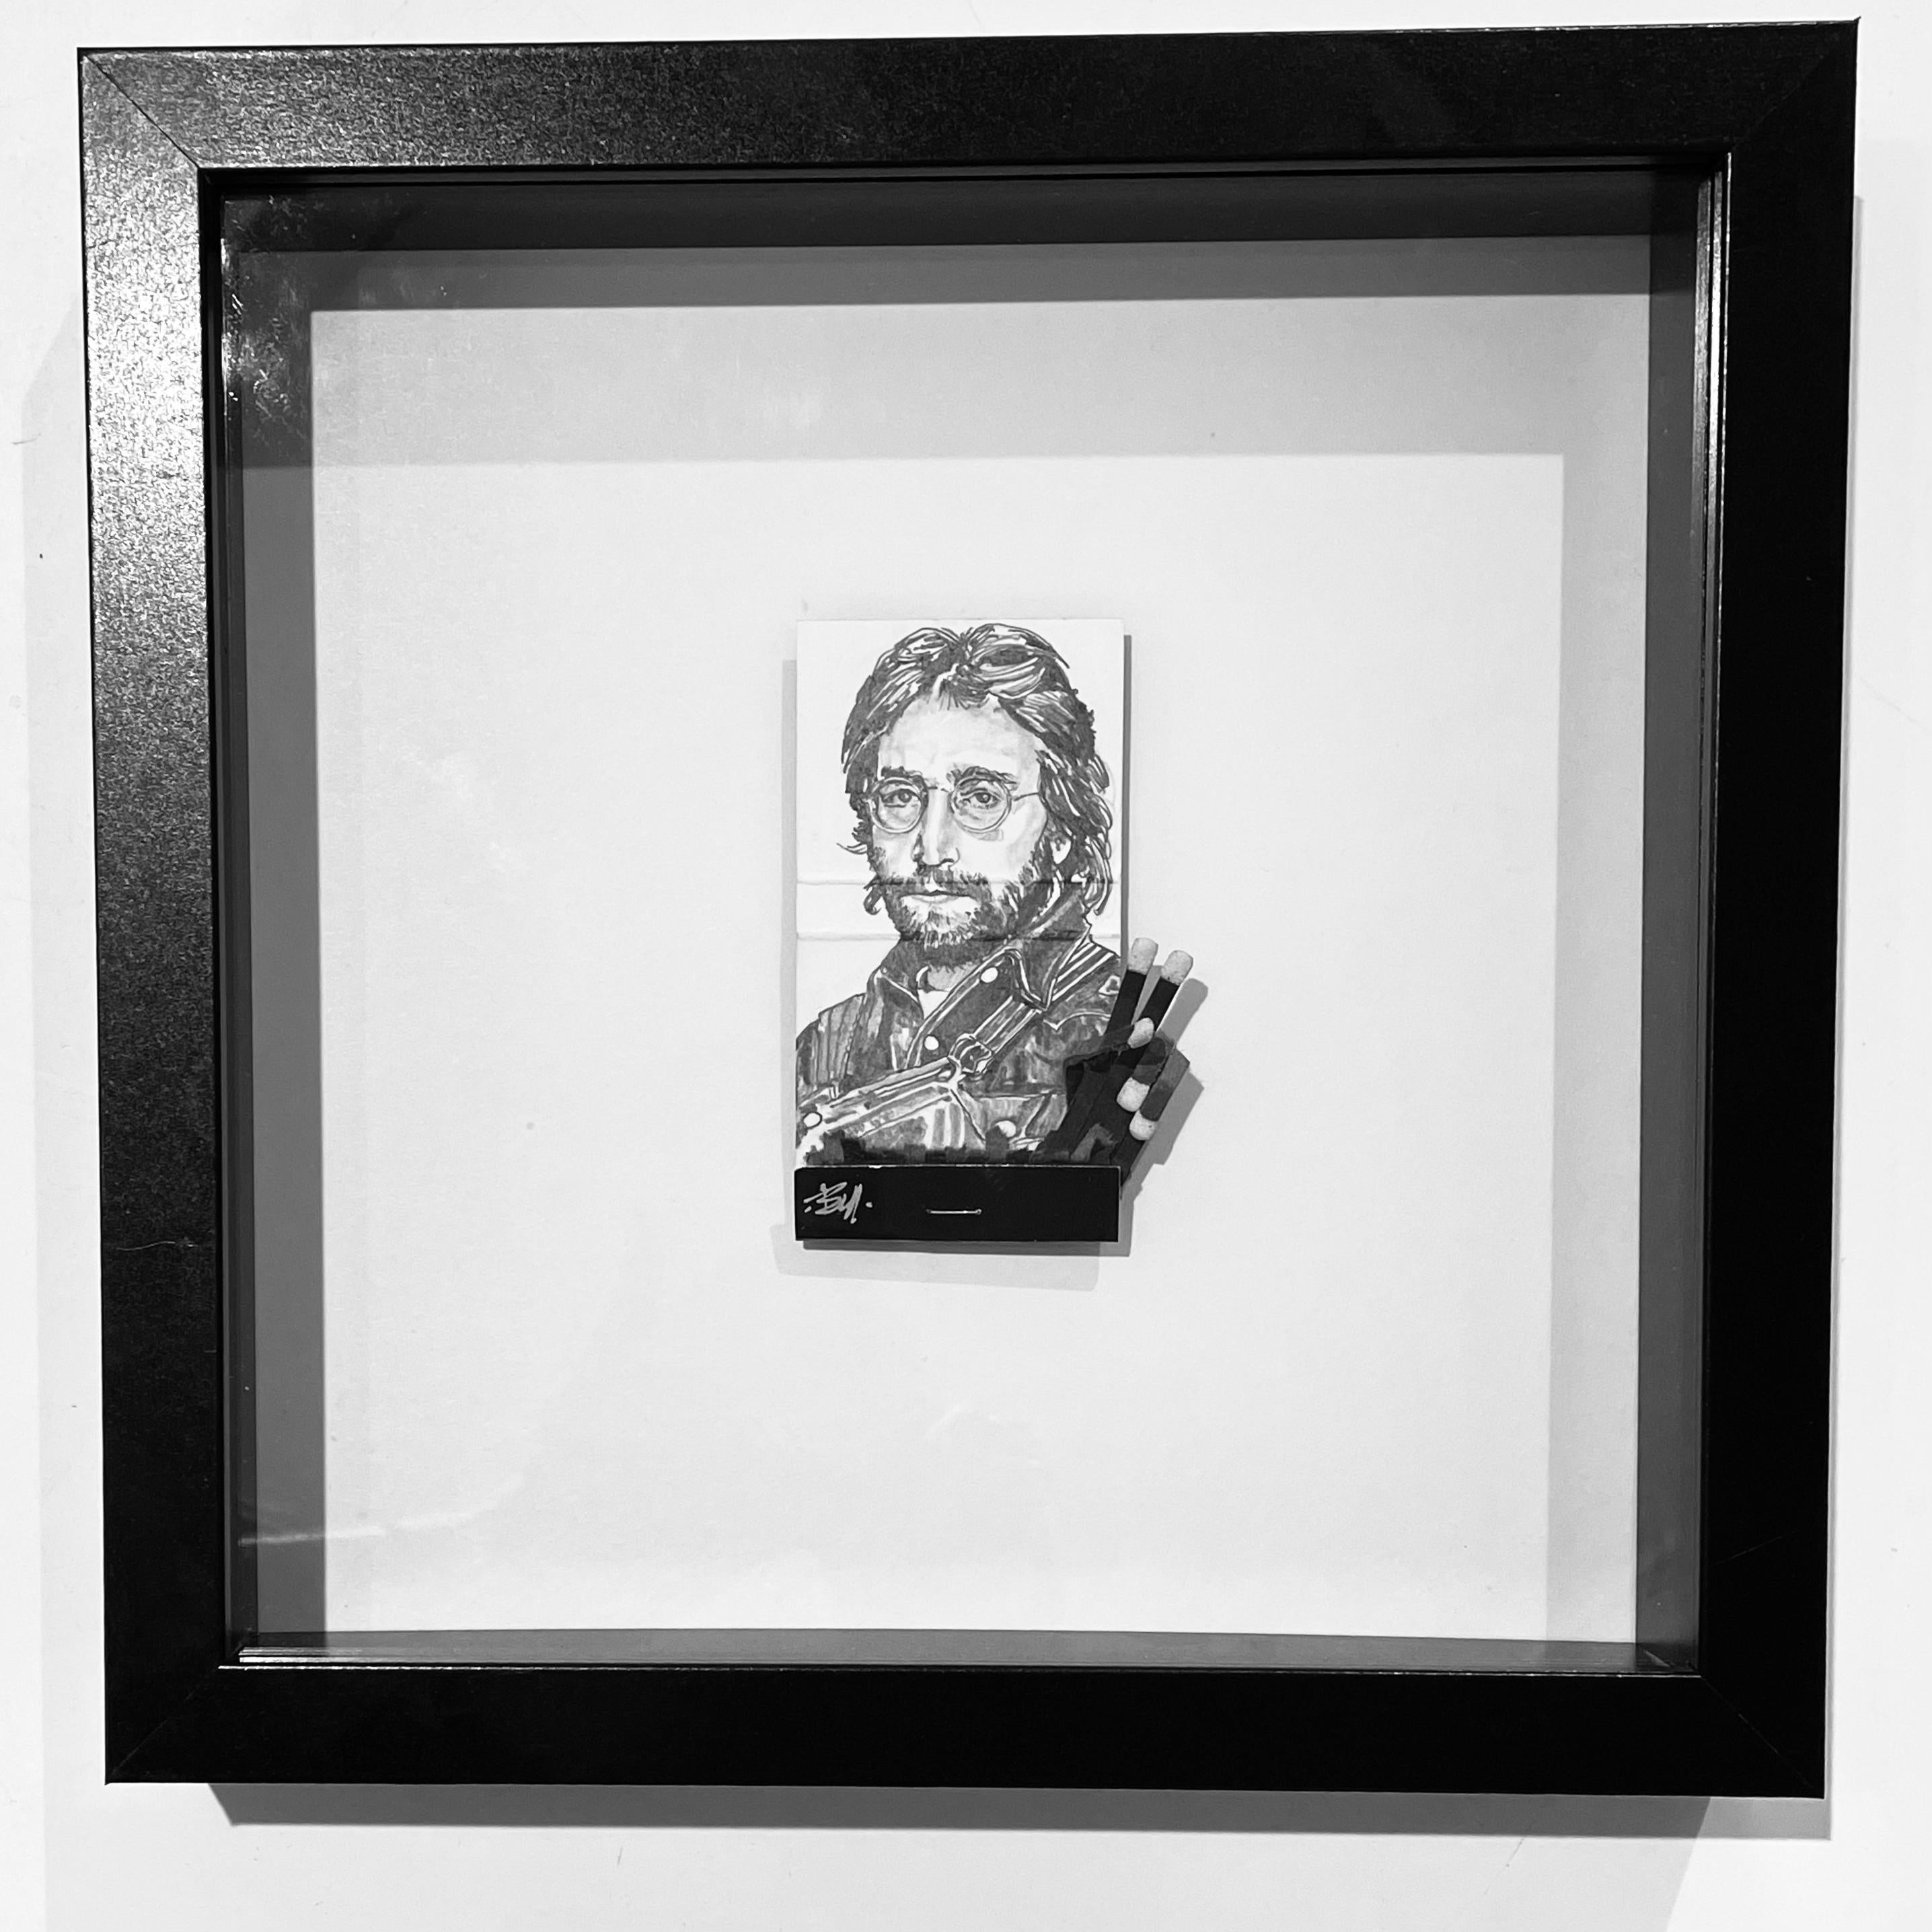 John Lennon - figurative black and white portrait pencil drawing on matchbox - Art by MB visual